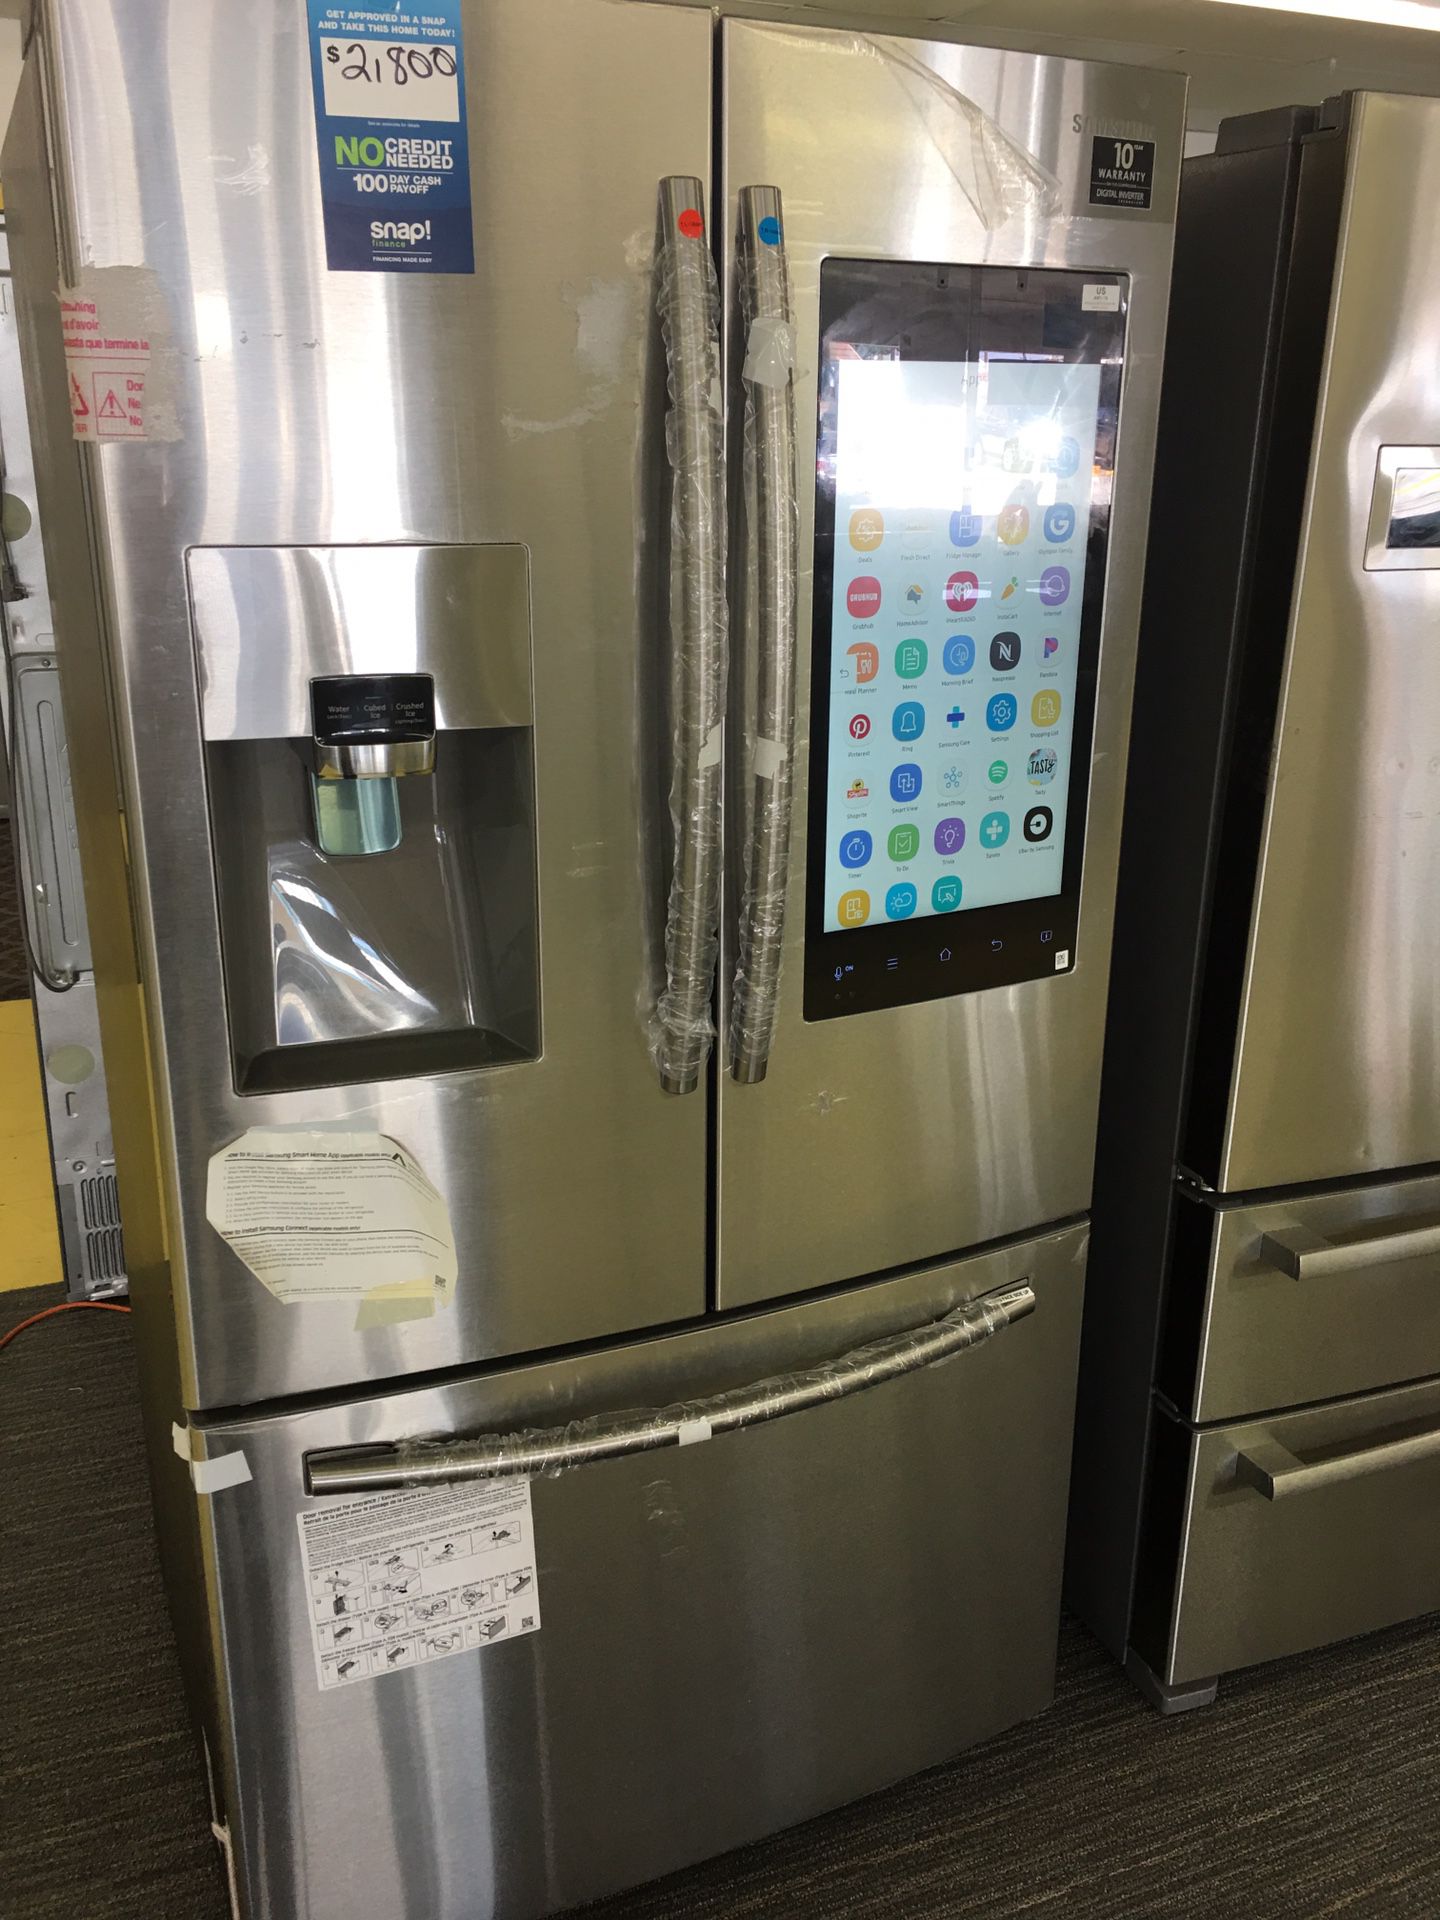 Brand New Samsung Family Hub Frech Door Refrigerador With Warranty No Credit Needed Just $54 De Enganche You Take Home